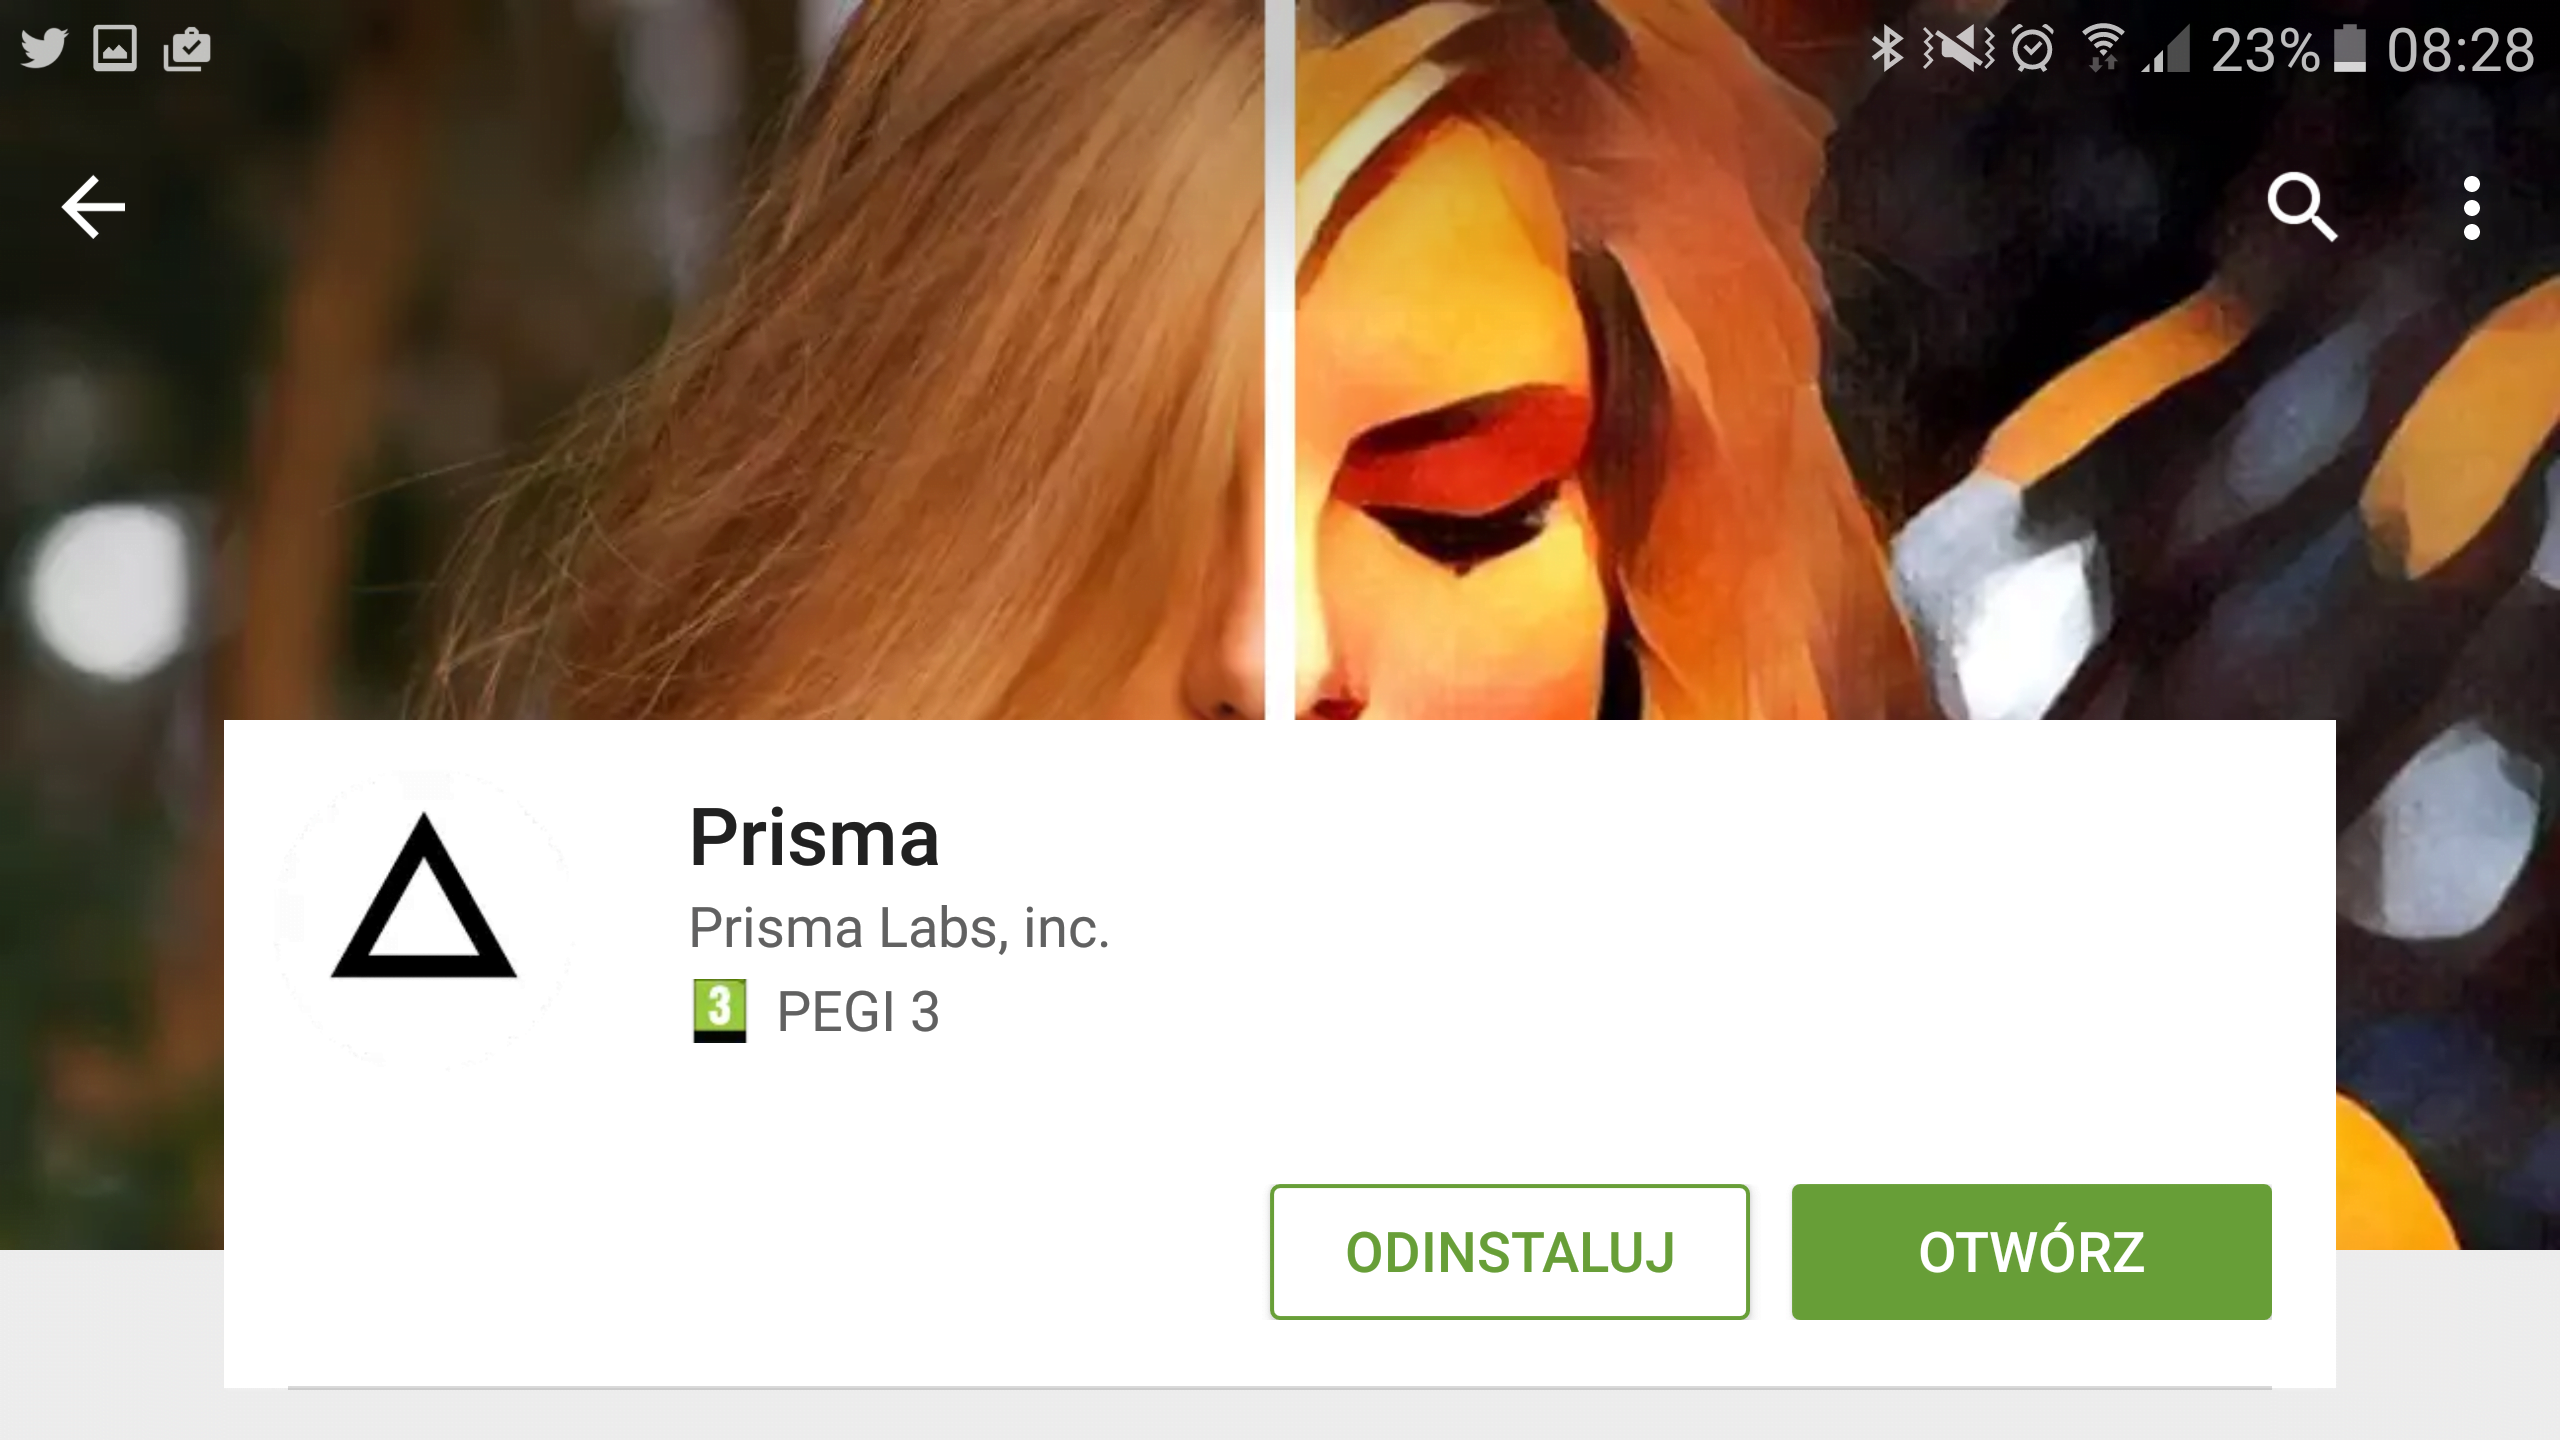 Prisma - Prisma Labs